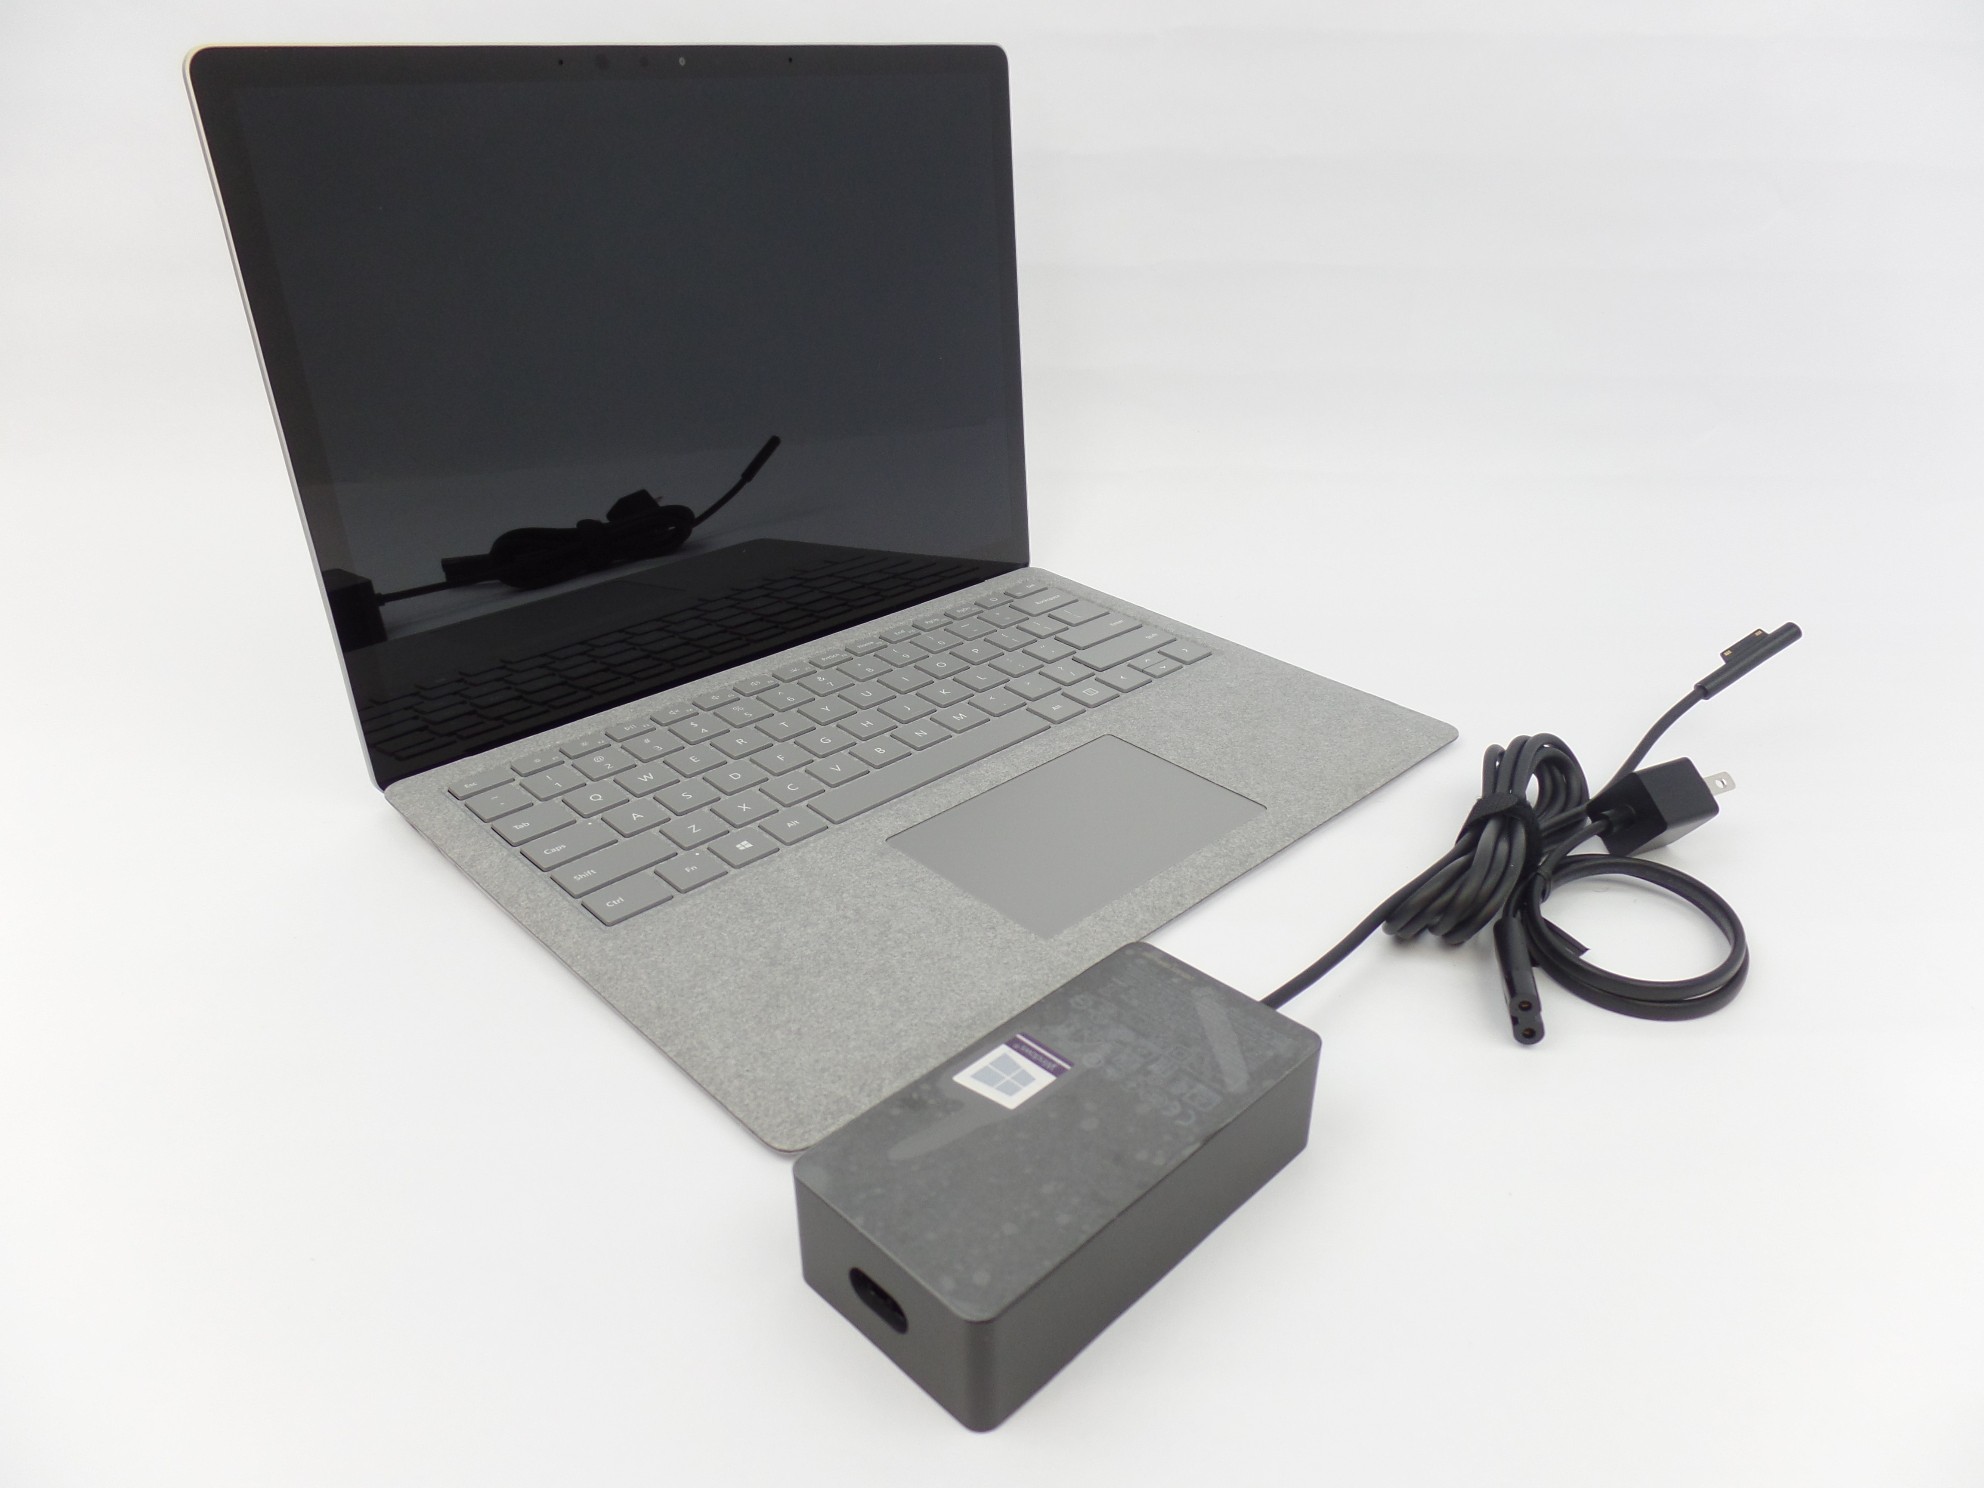 Microsoft Surface Laptop 1769 13.5" Touch i5-7200U 2.5GHz 8GB 256GB SSD W10H SD